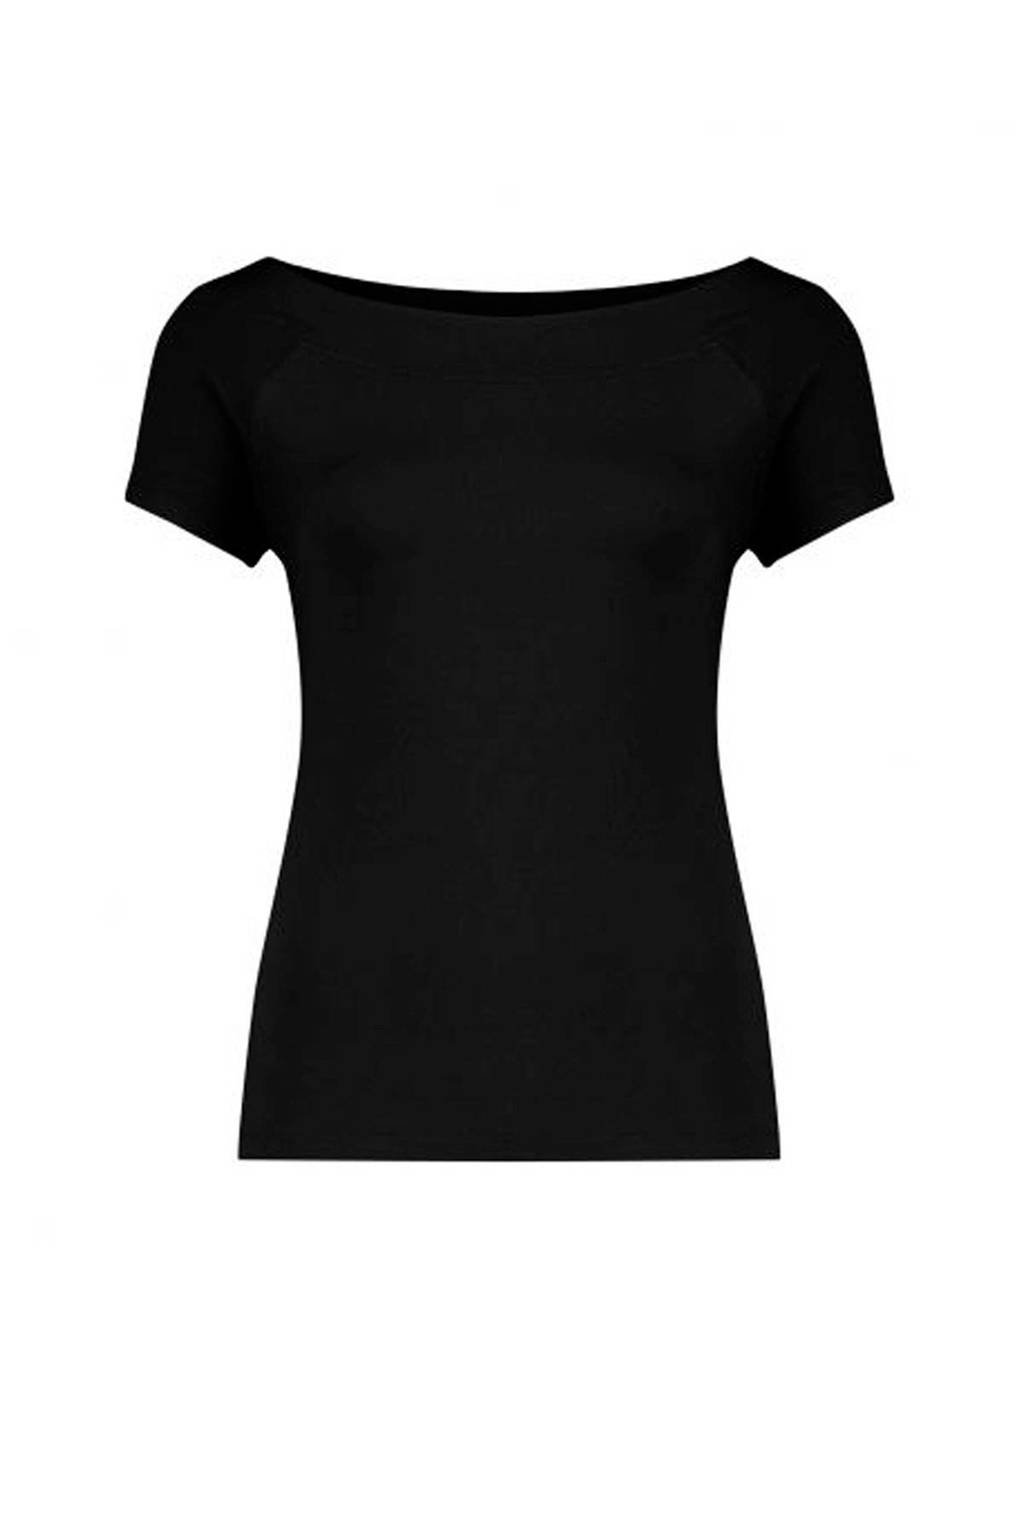 overzien mond Geschiktheid Claudia Sträter T-shirt met boothals zwart | wehkamp